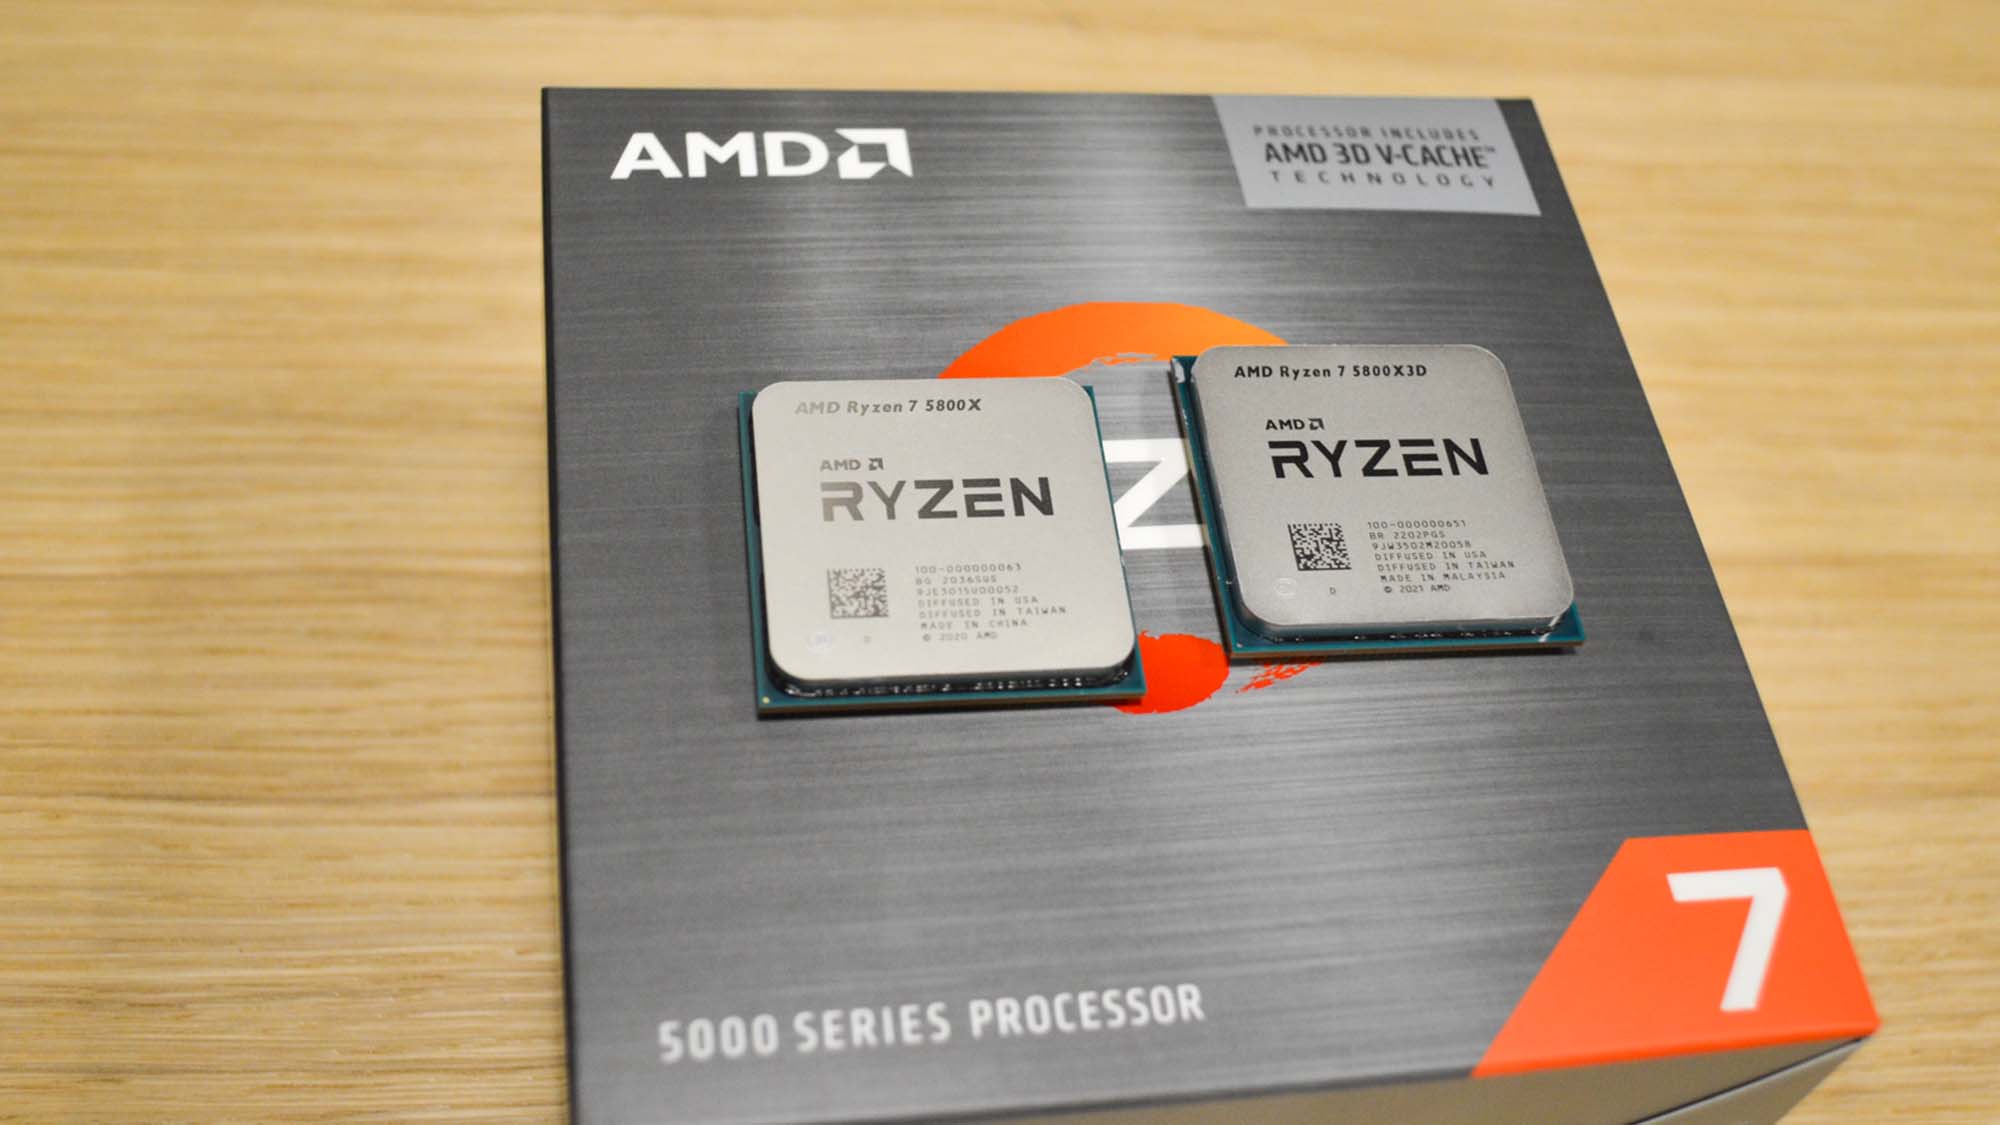 AMD Ryzen 7 5800X3D og Ryzen 7 5800X liggende side om side